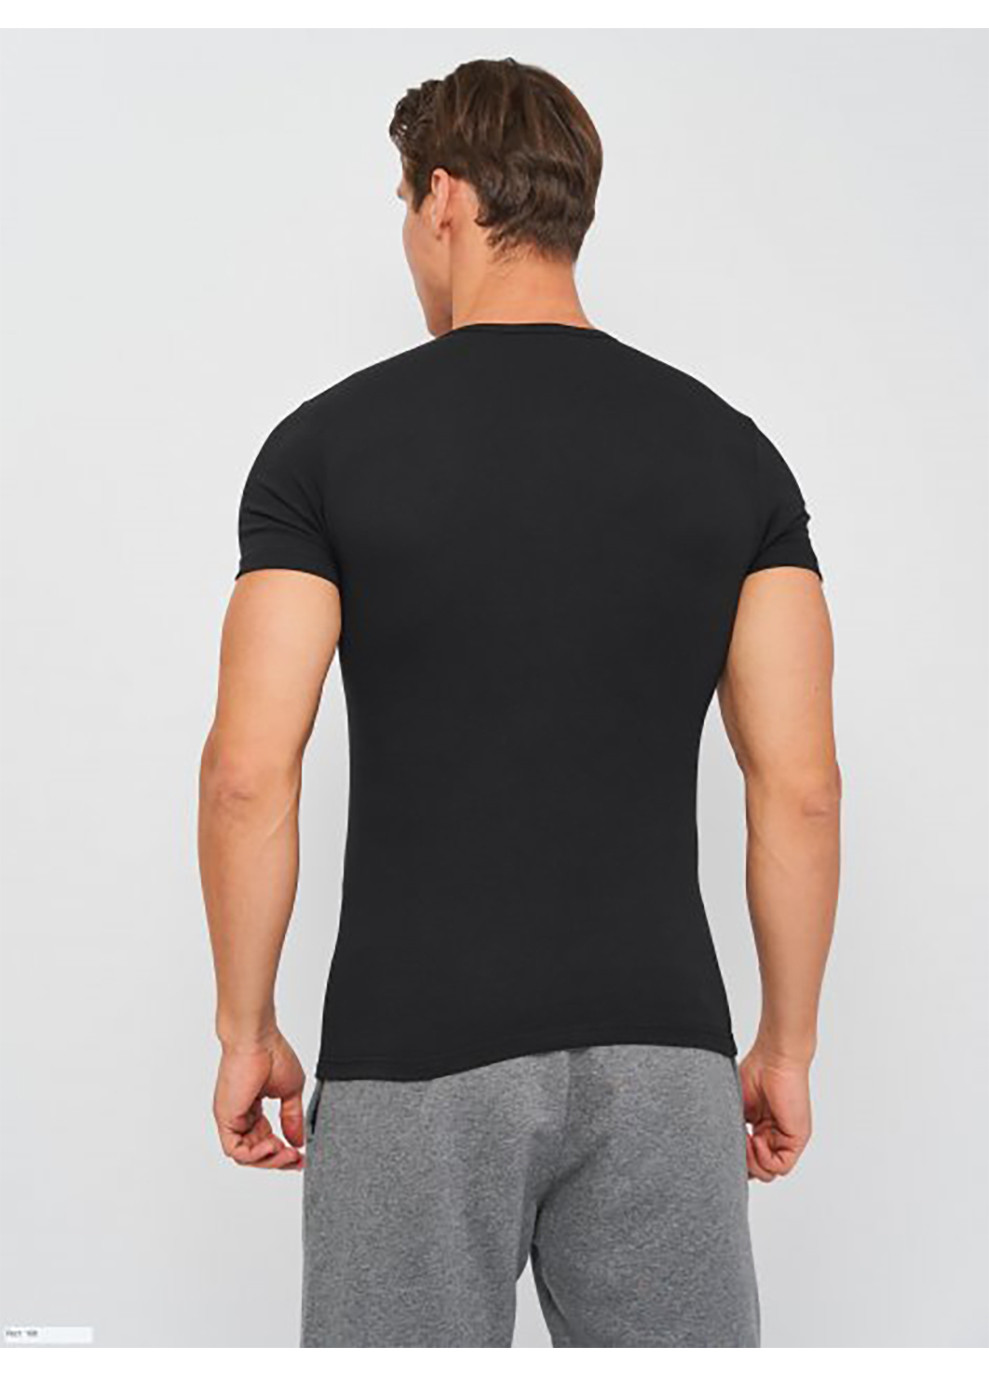 Темно-серая футболка t-shirt mezza manica girocollo темно-серый муж l k1304 antracite l Kappa